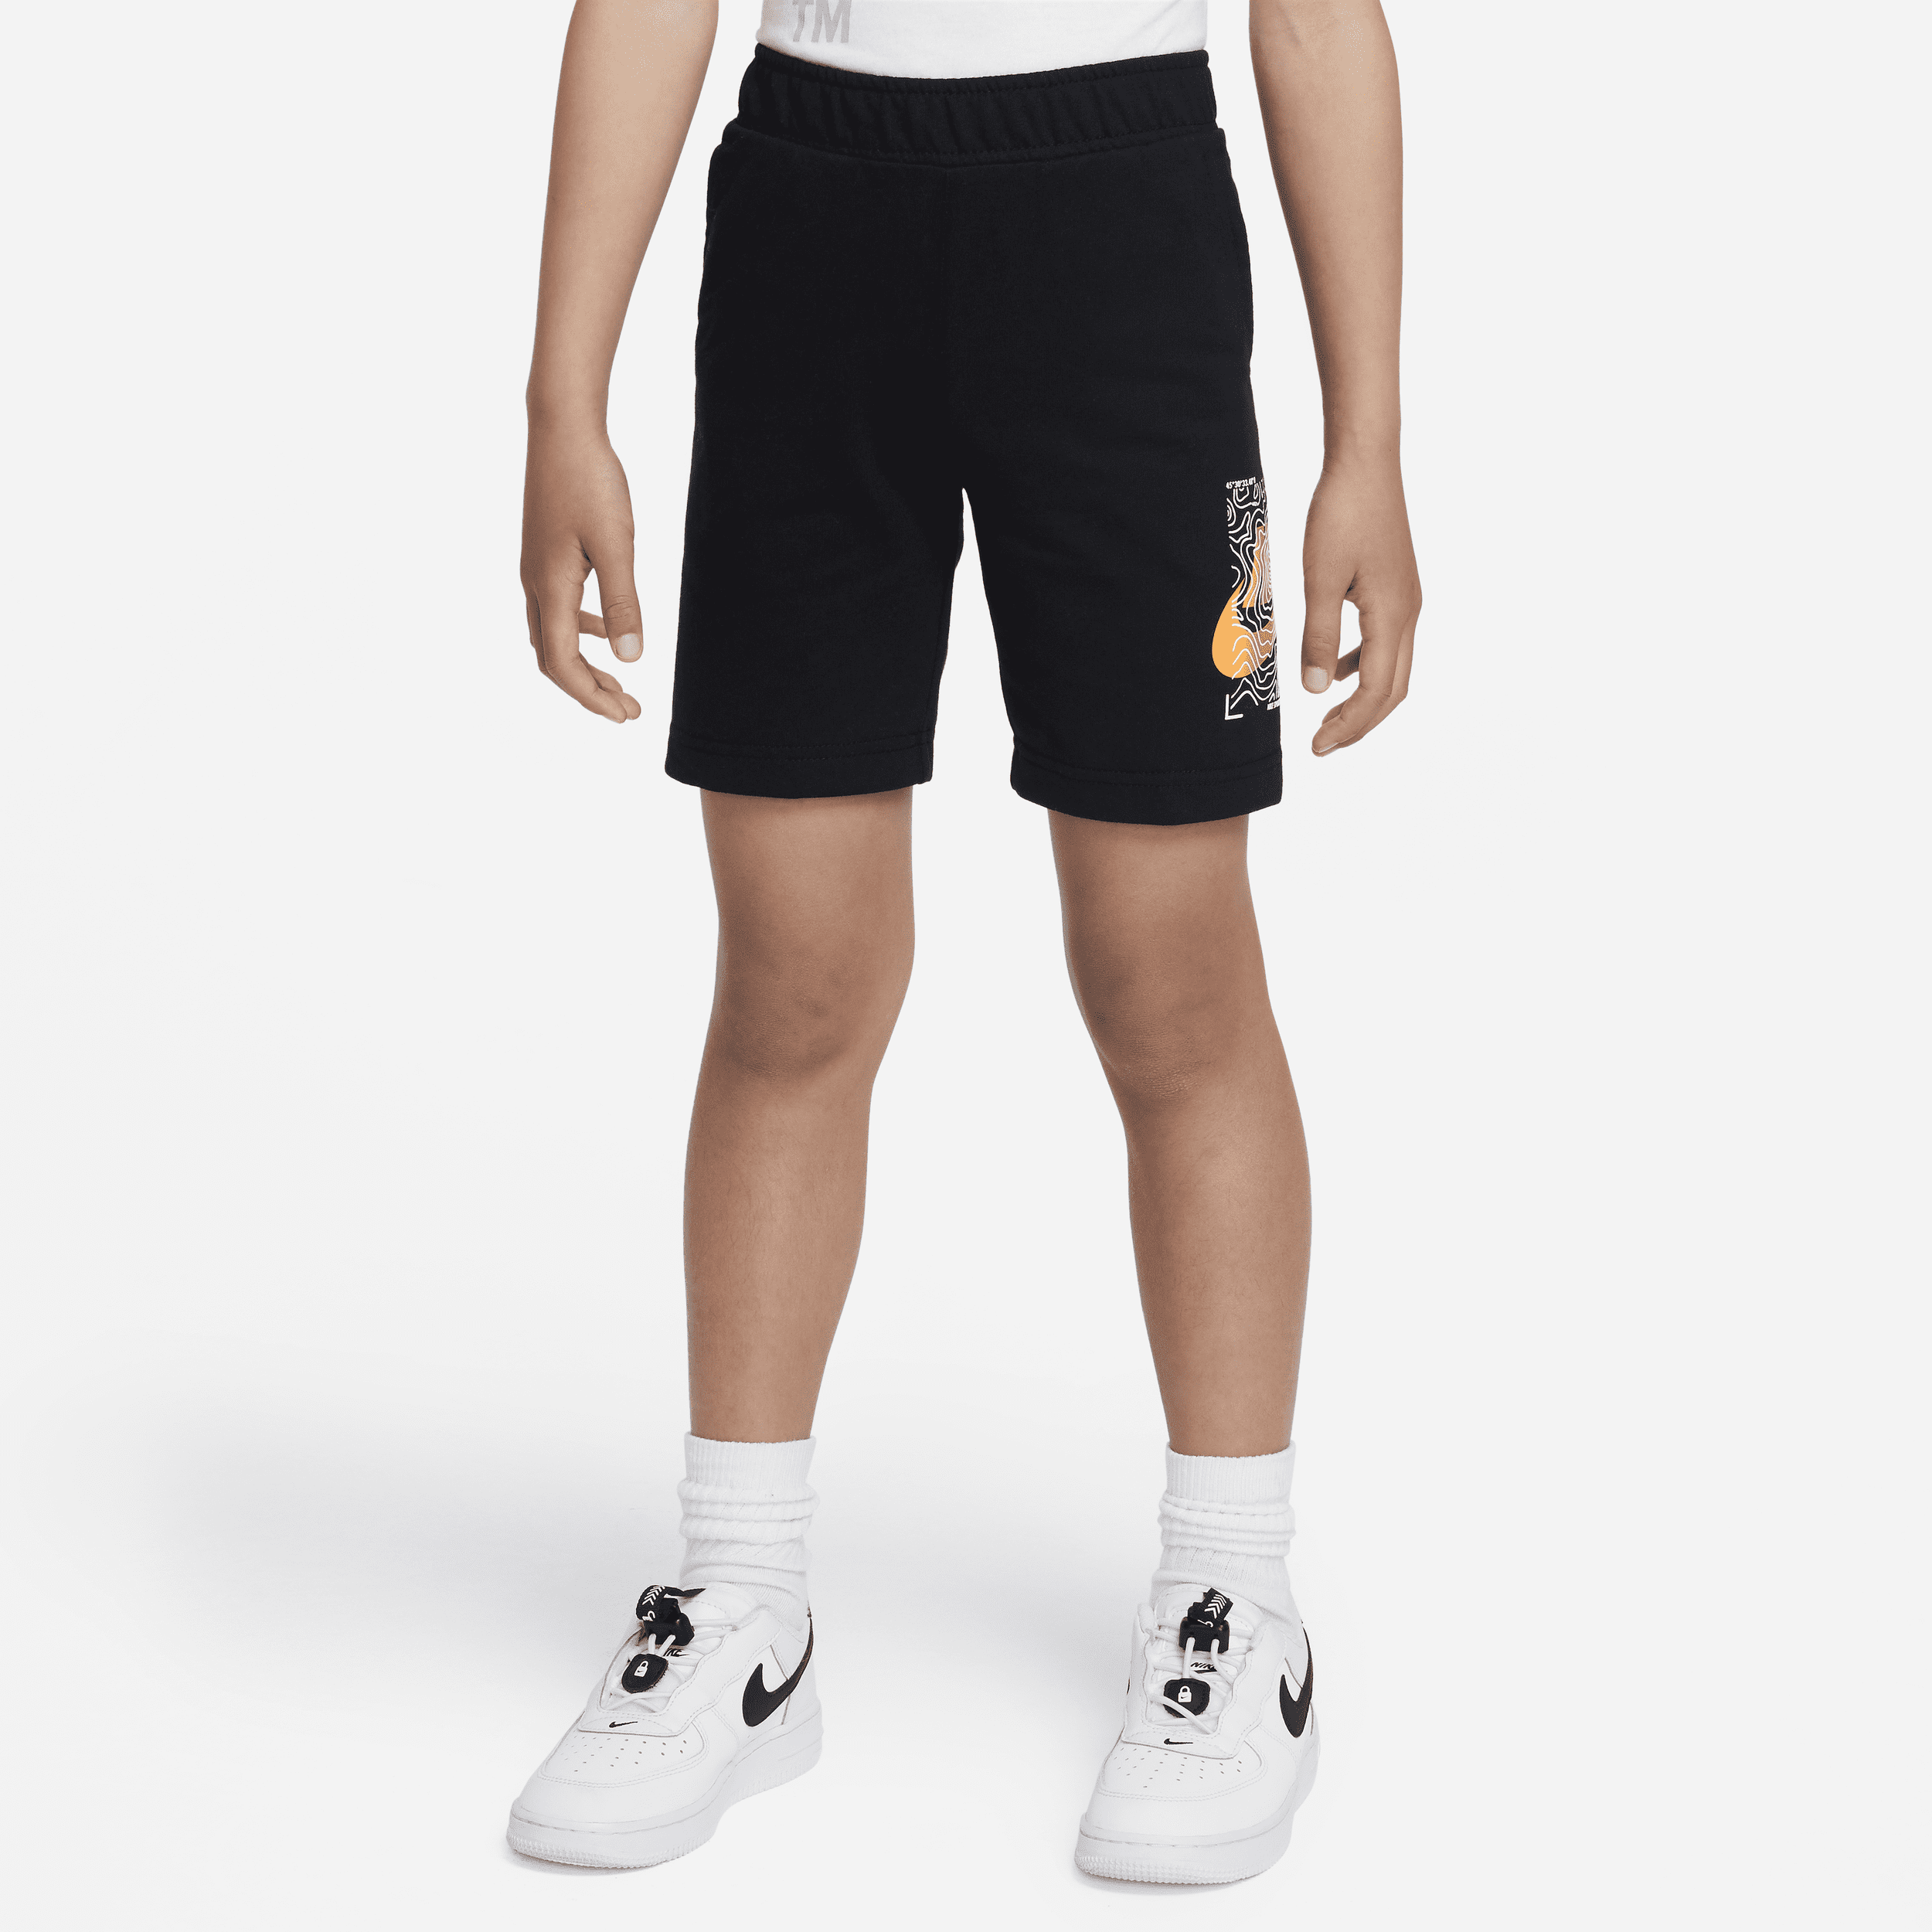 Shorts Nike – Bambini - Nero